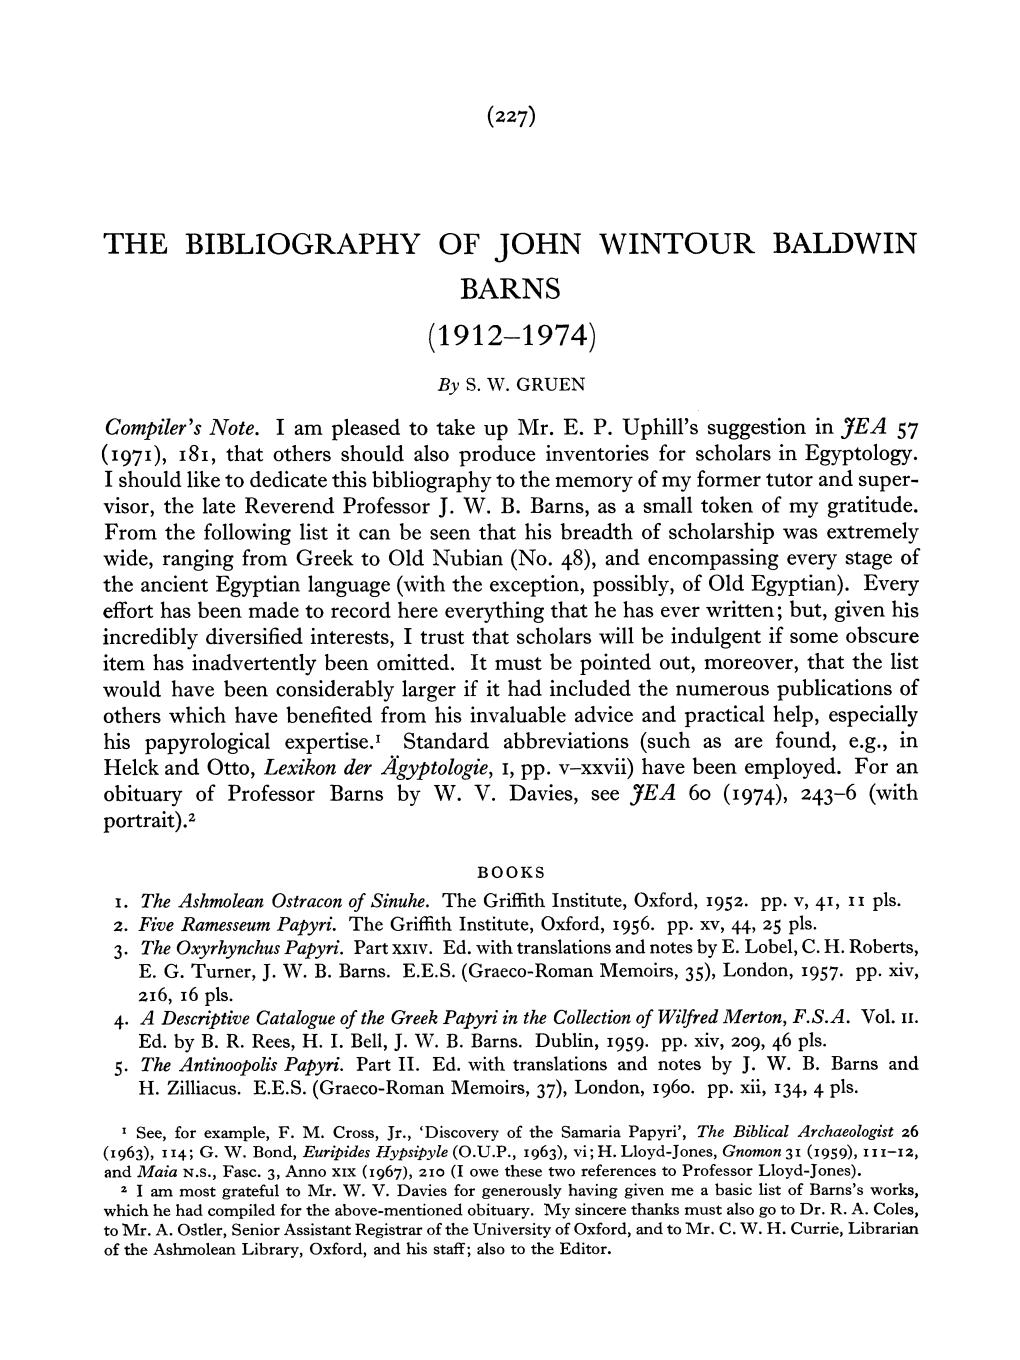 The Bibliography of John Wintour Baldwin Barns (1912-1974)